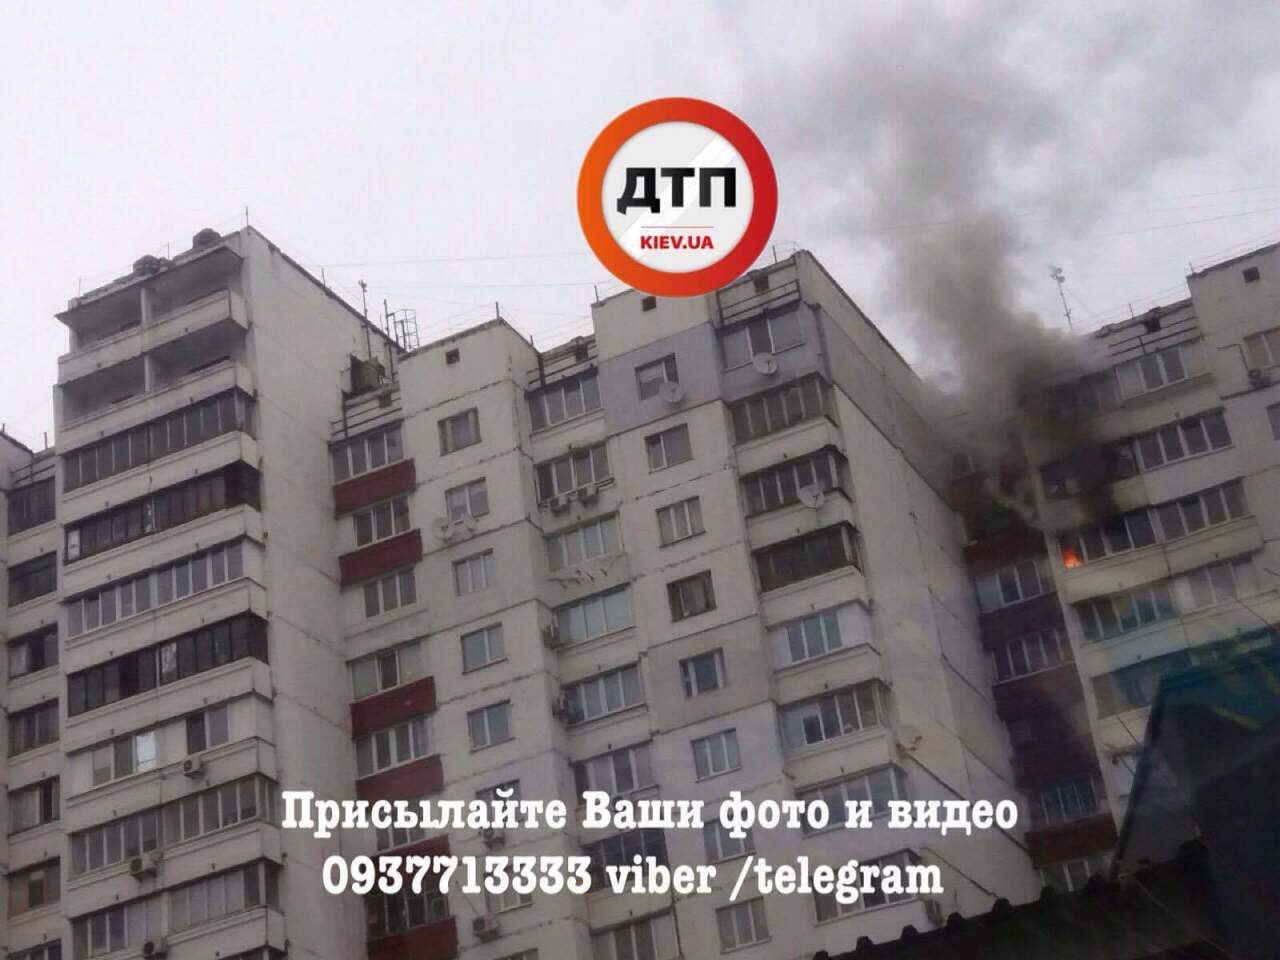 В столице в многоэтажке горела квартира (фото)